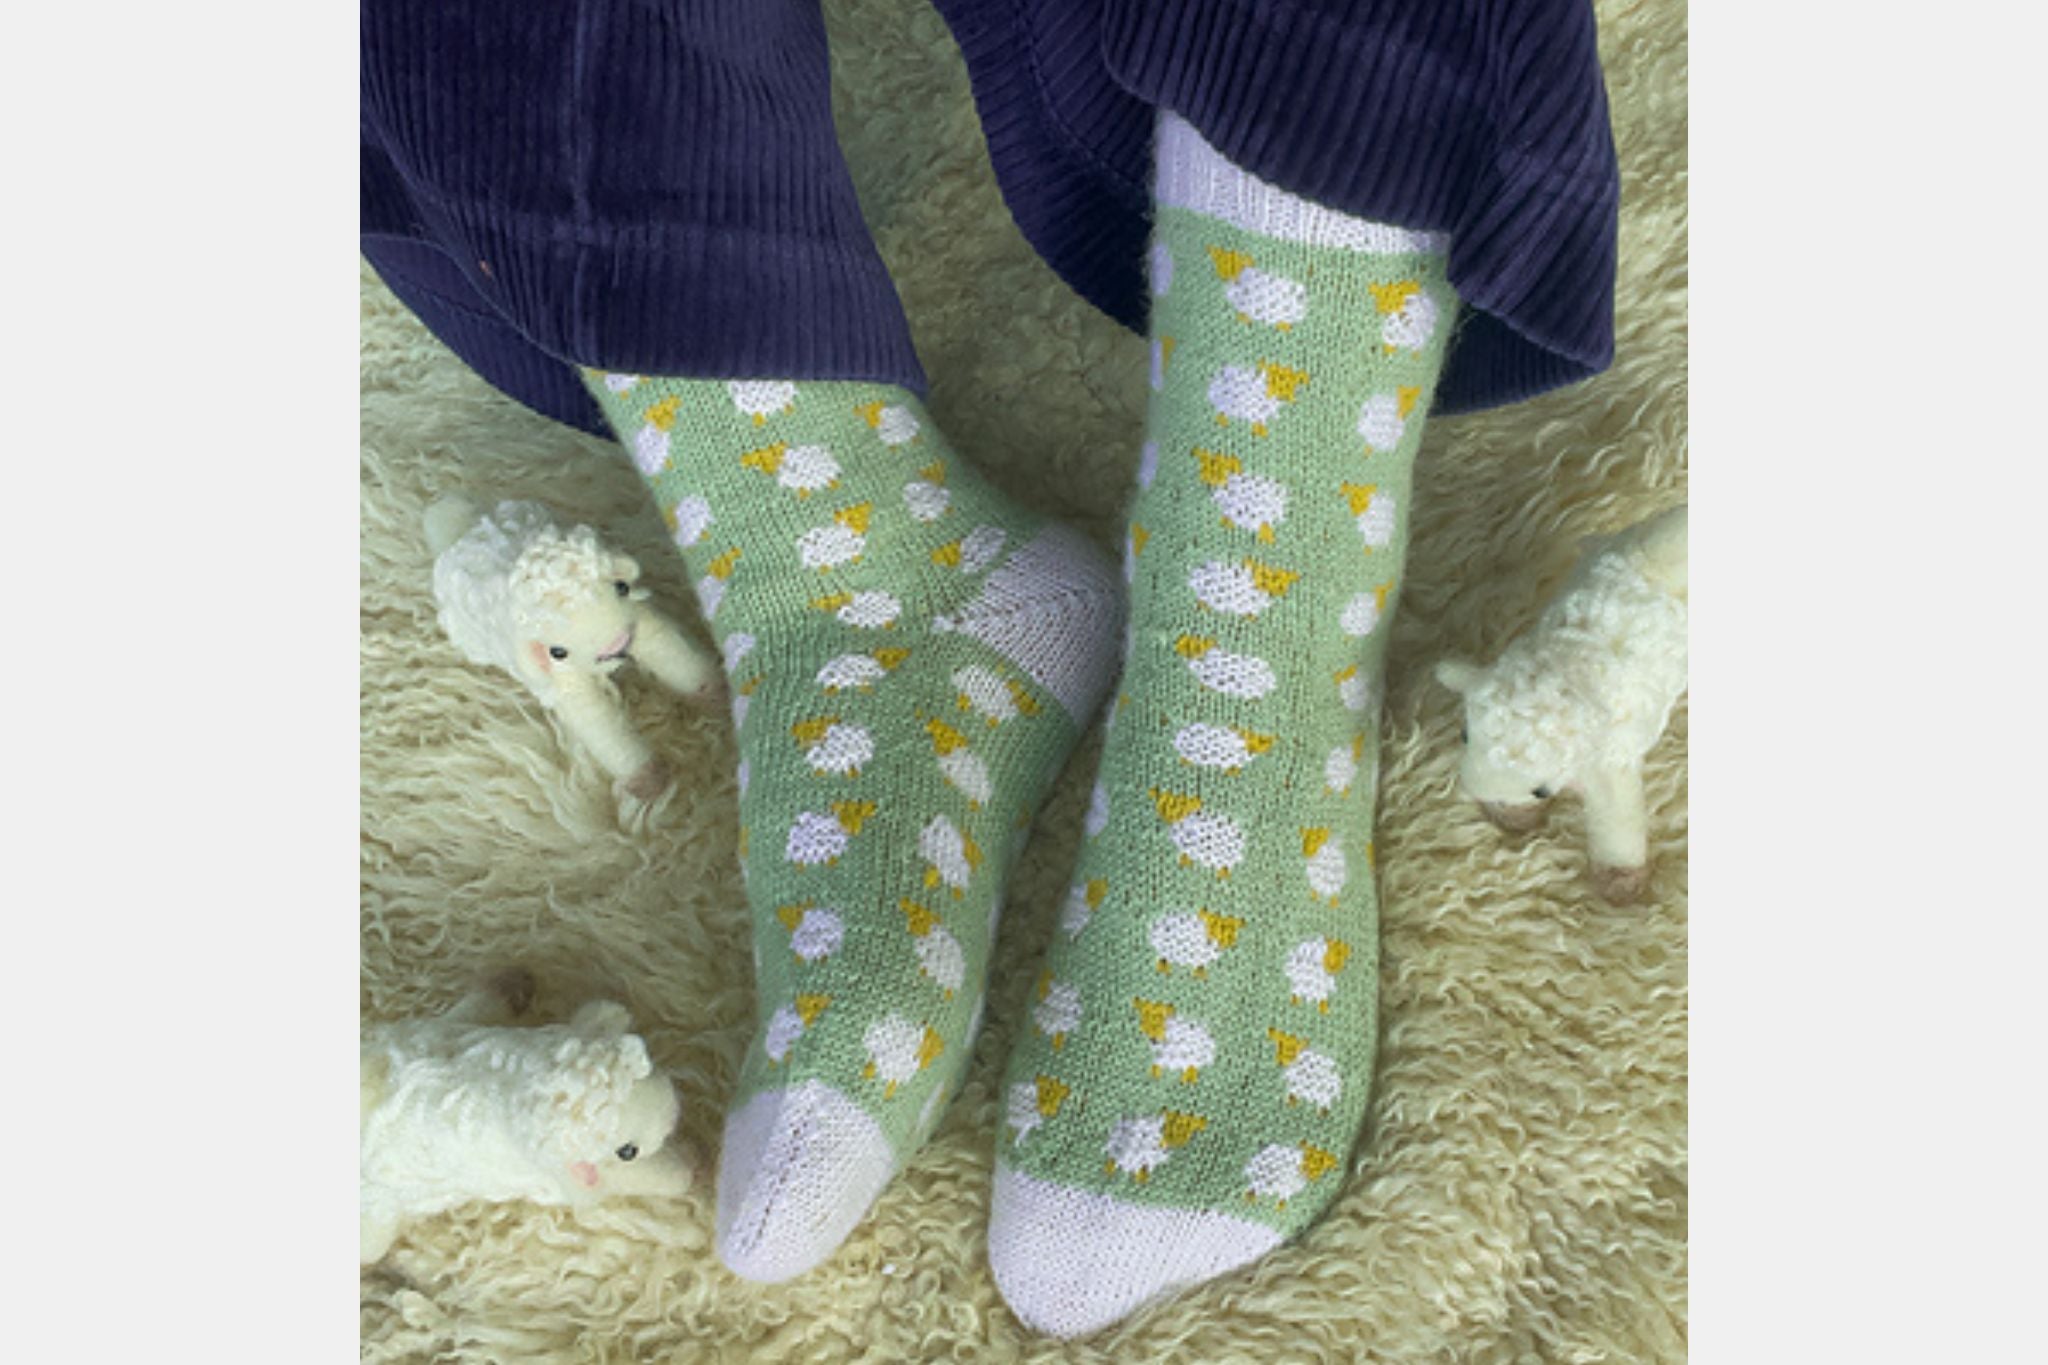 Charming Colorwork Socks Counting Sheep